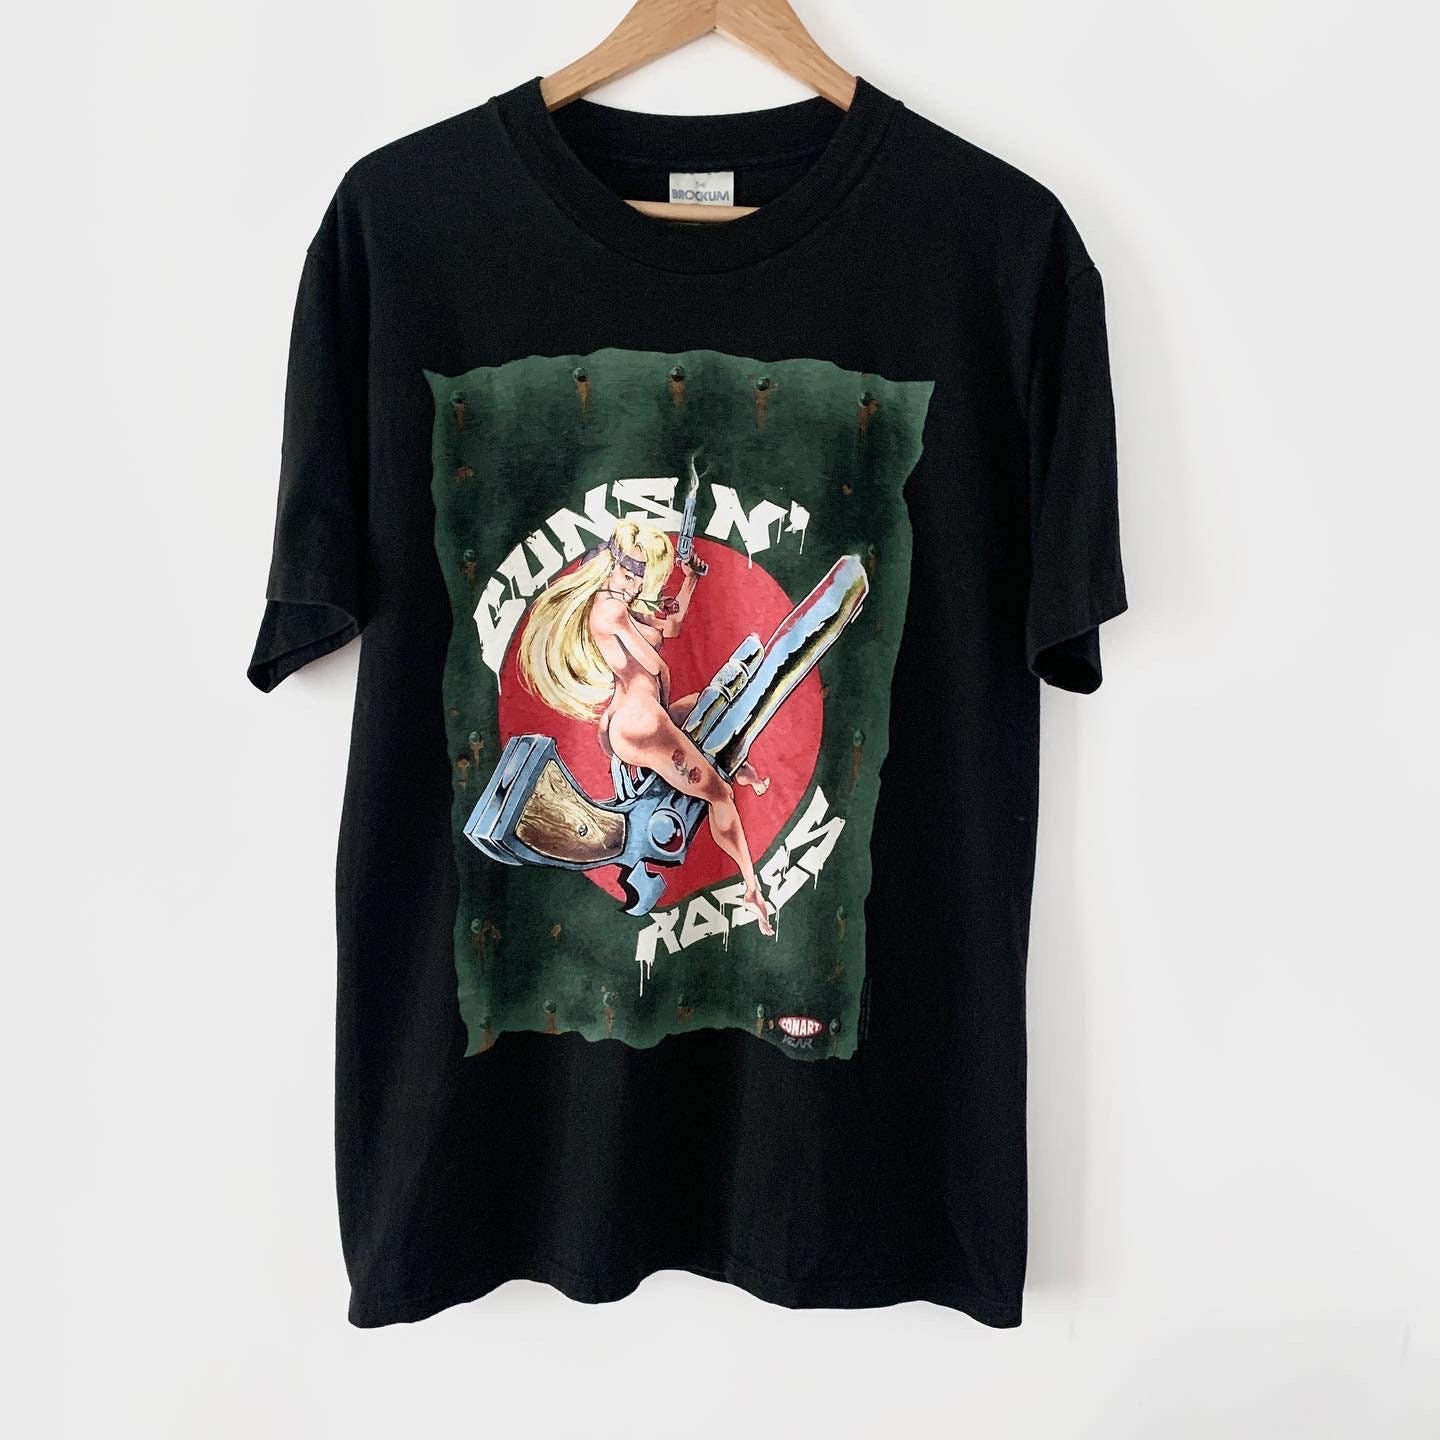 1992 Guns N Roses Vintage Tour Band Rock Tee Shirt 90s 1990s - Etsy